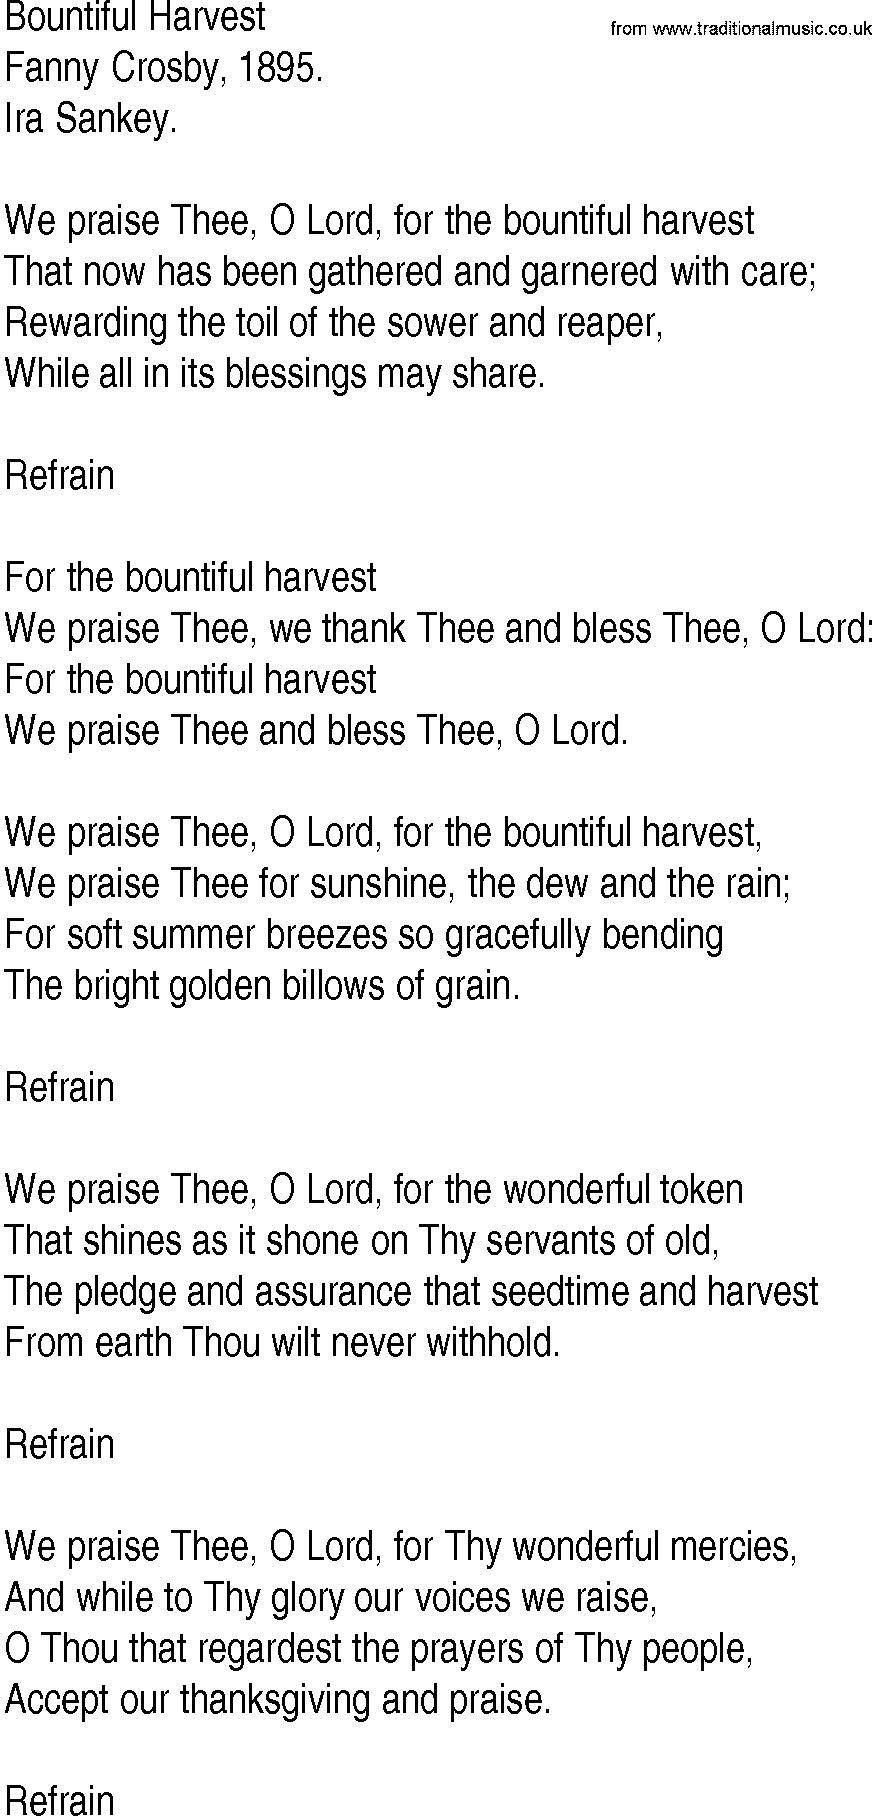 Hymn and Gospel Song: Bountiful Harvest by Fanny Crosby lyrics